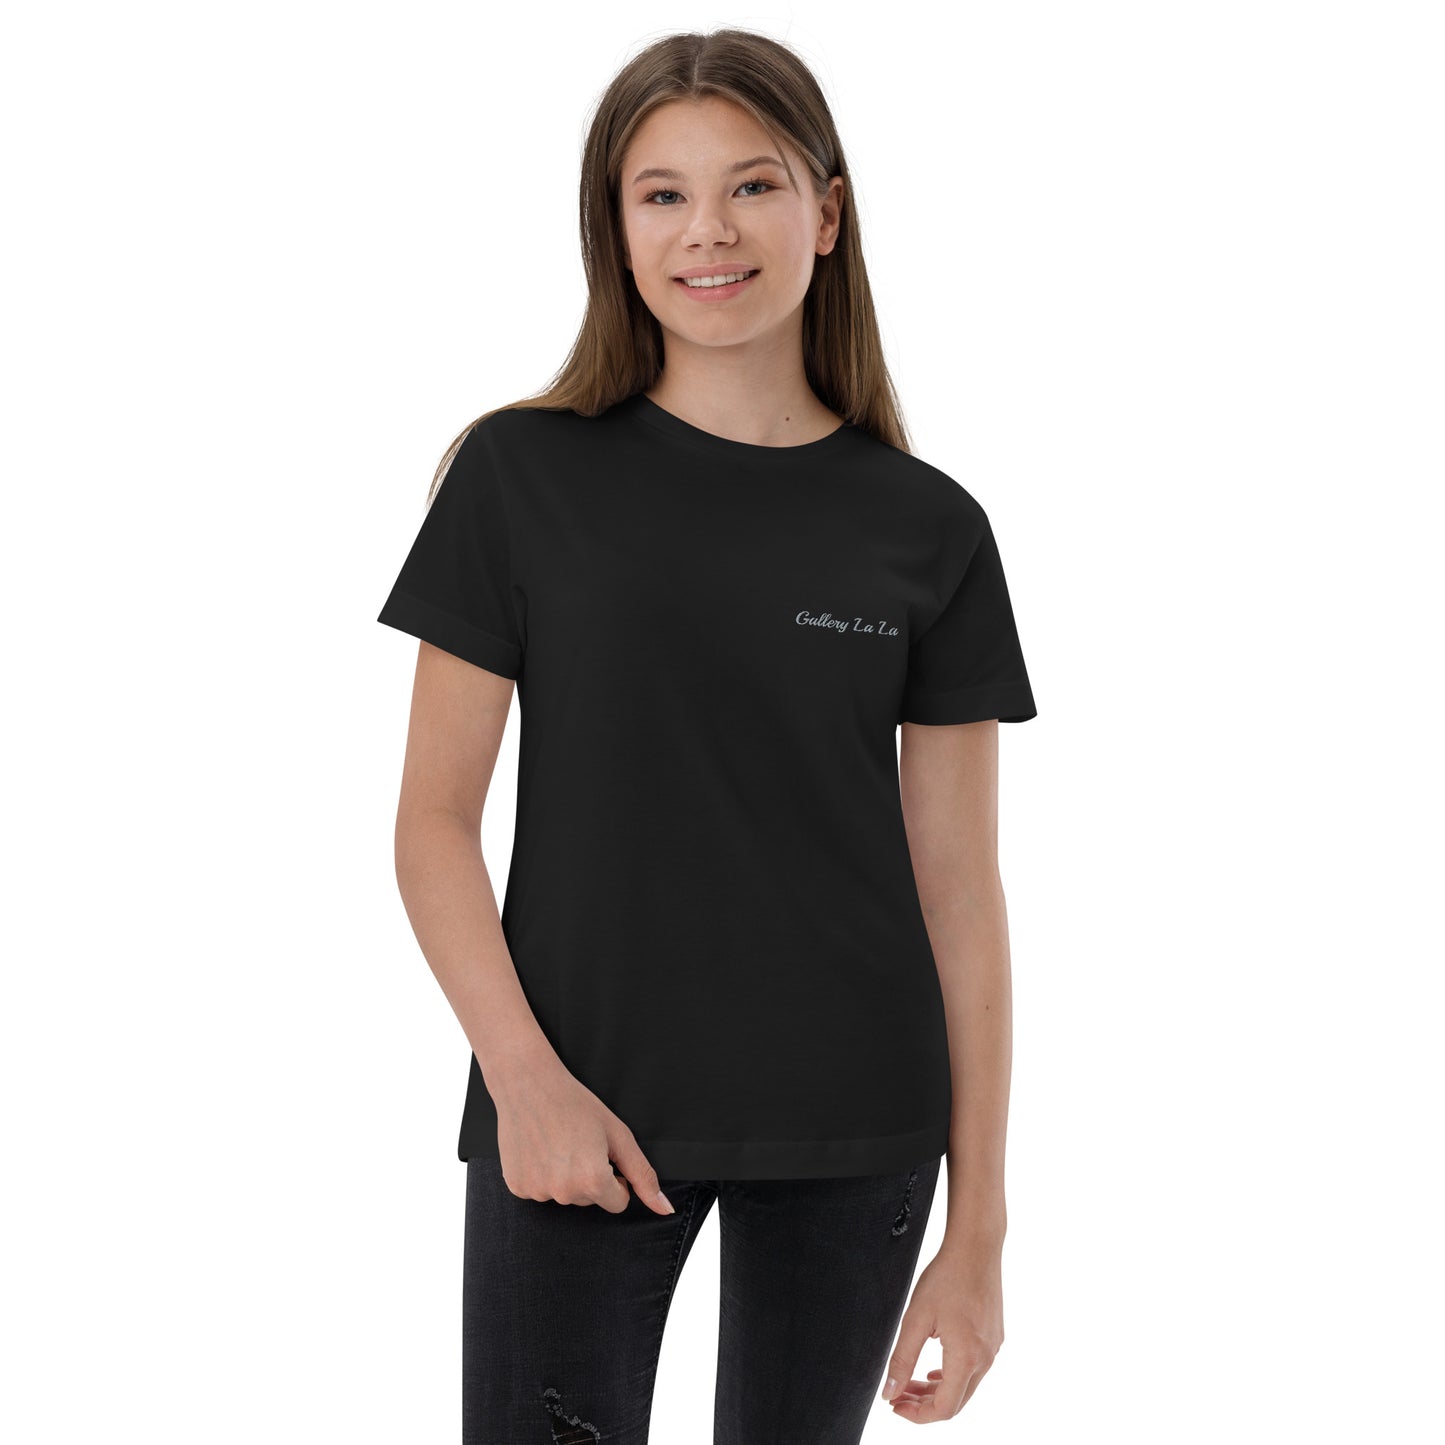 Youth Jersey T-Shirt|Gallery La La|Girls